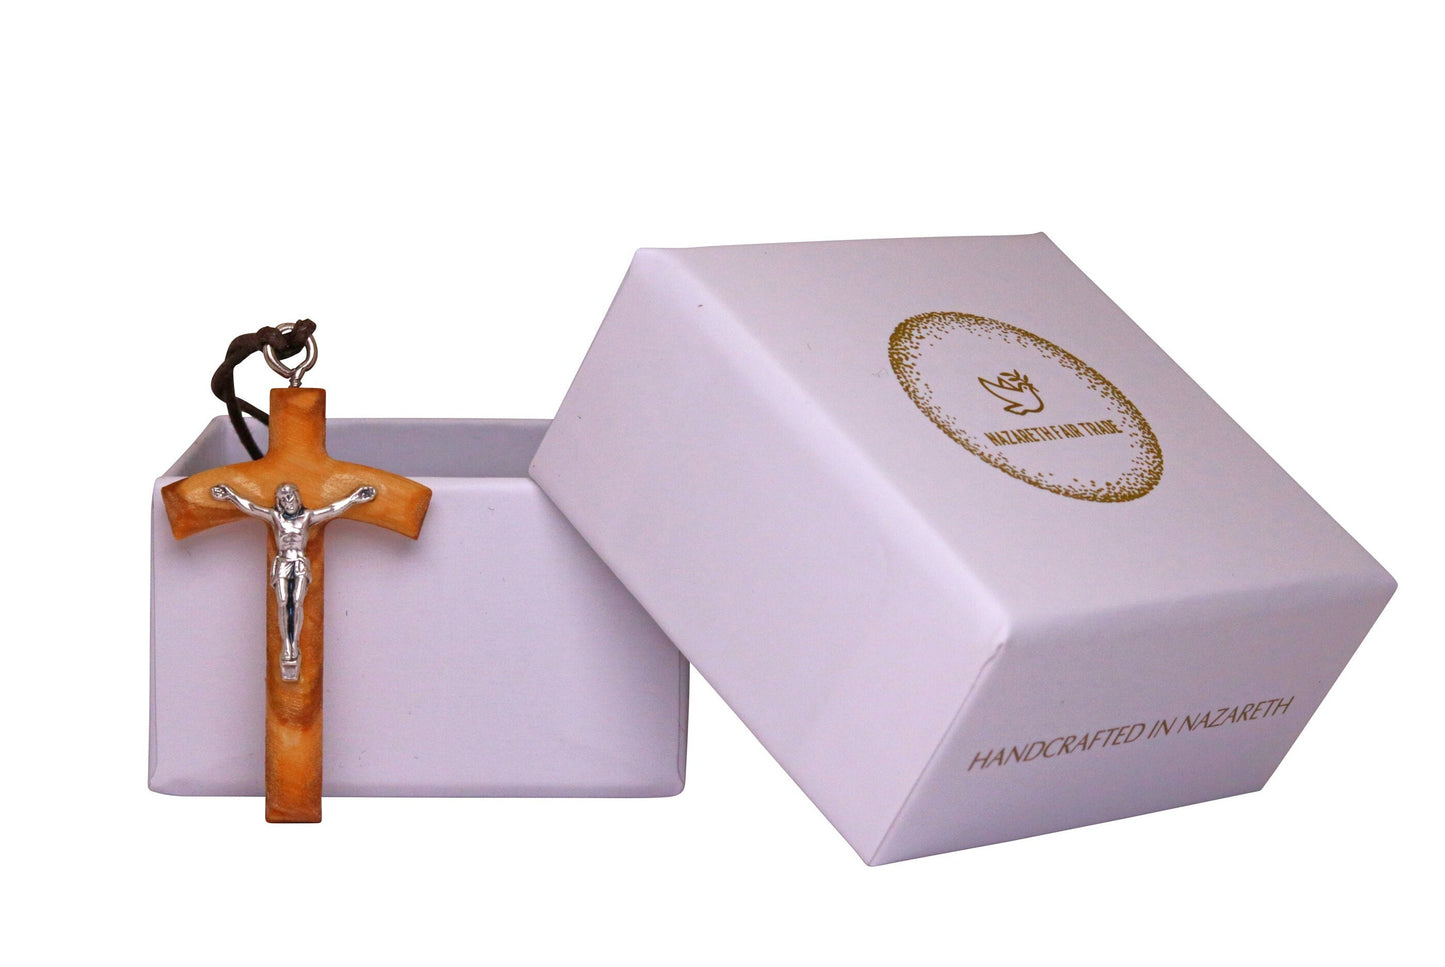 Nazareth Fair Trade Arc of Reverence Handmade Olive Wood Crucifix